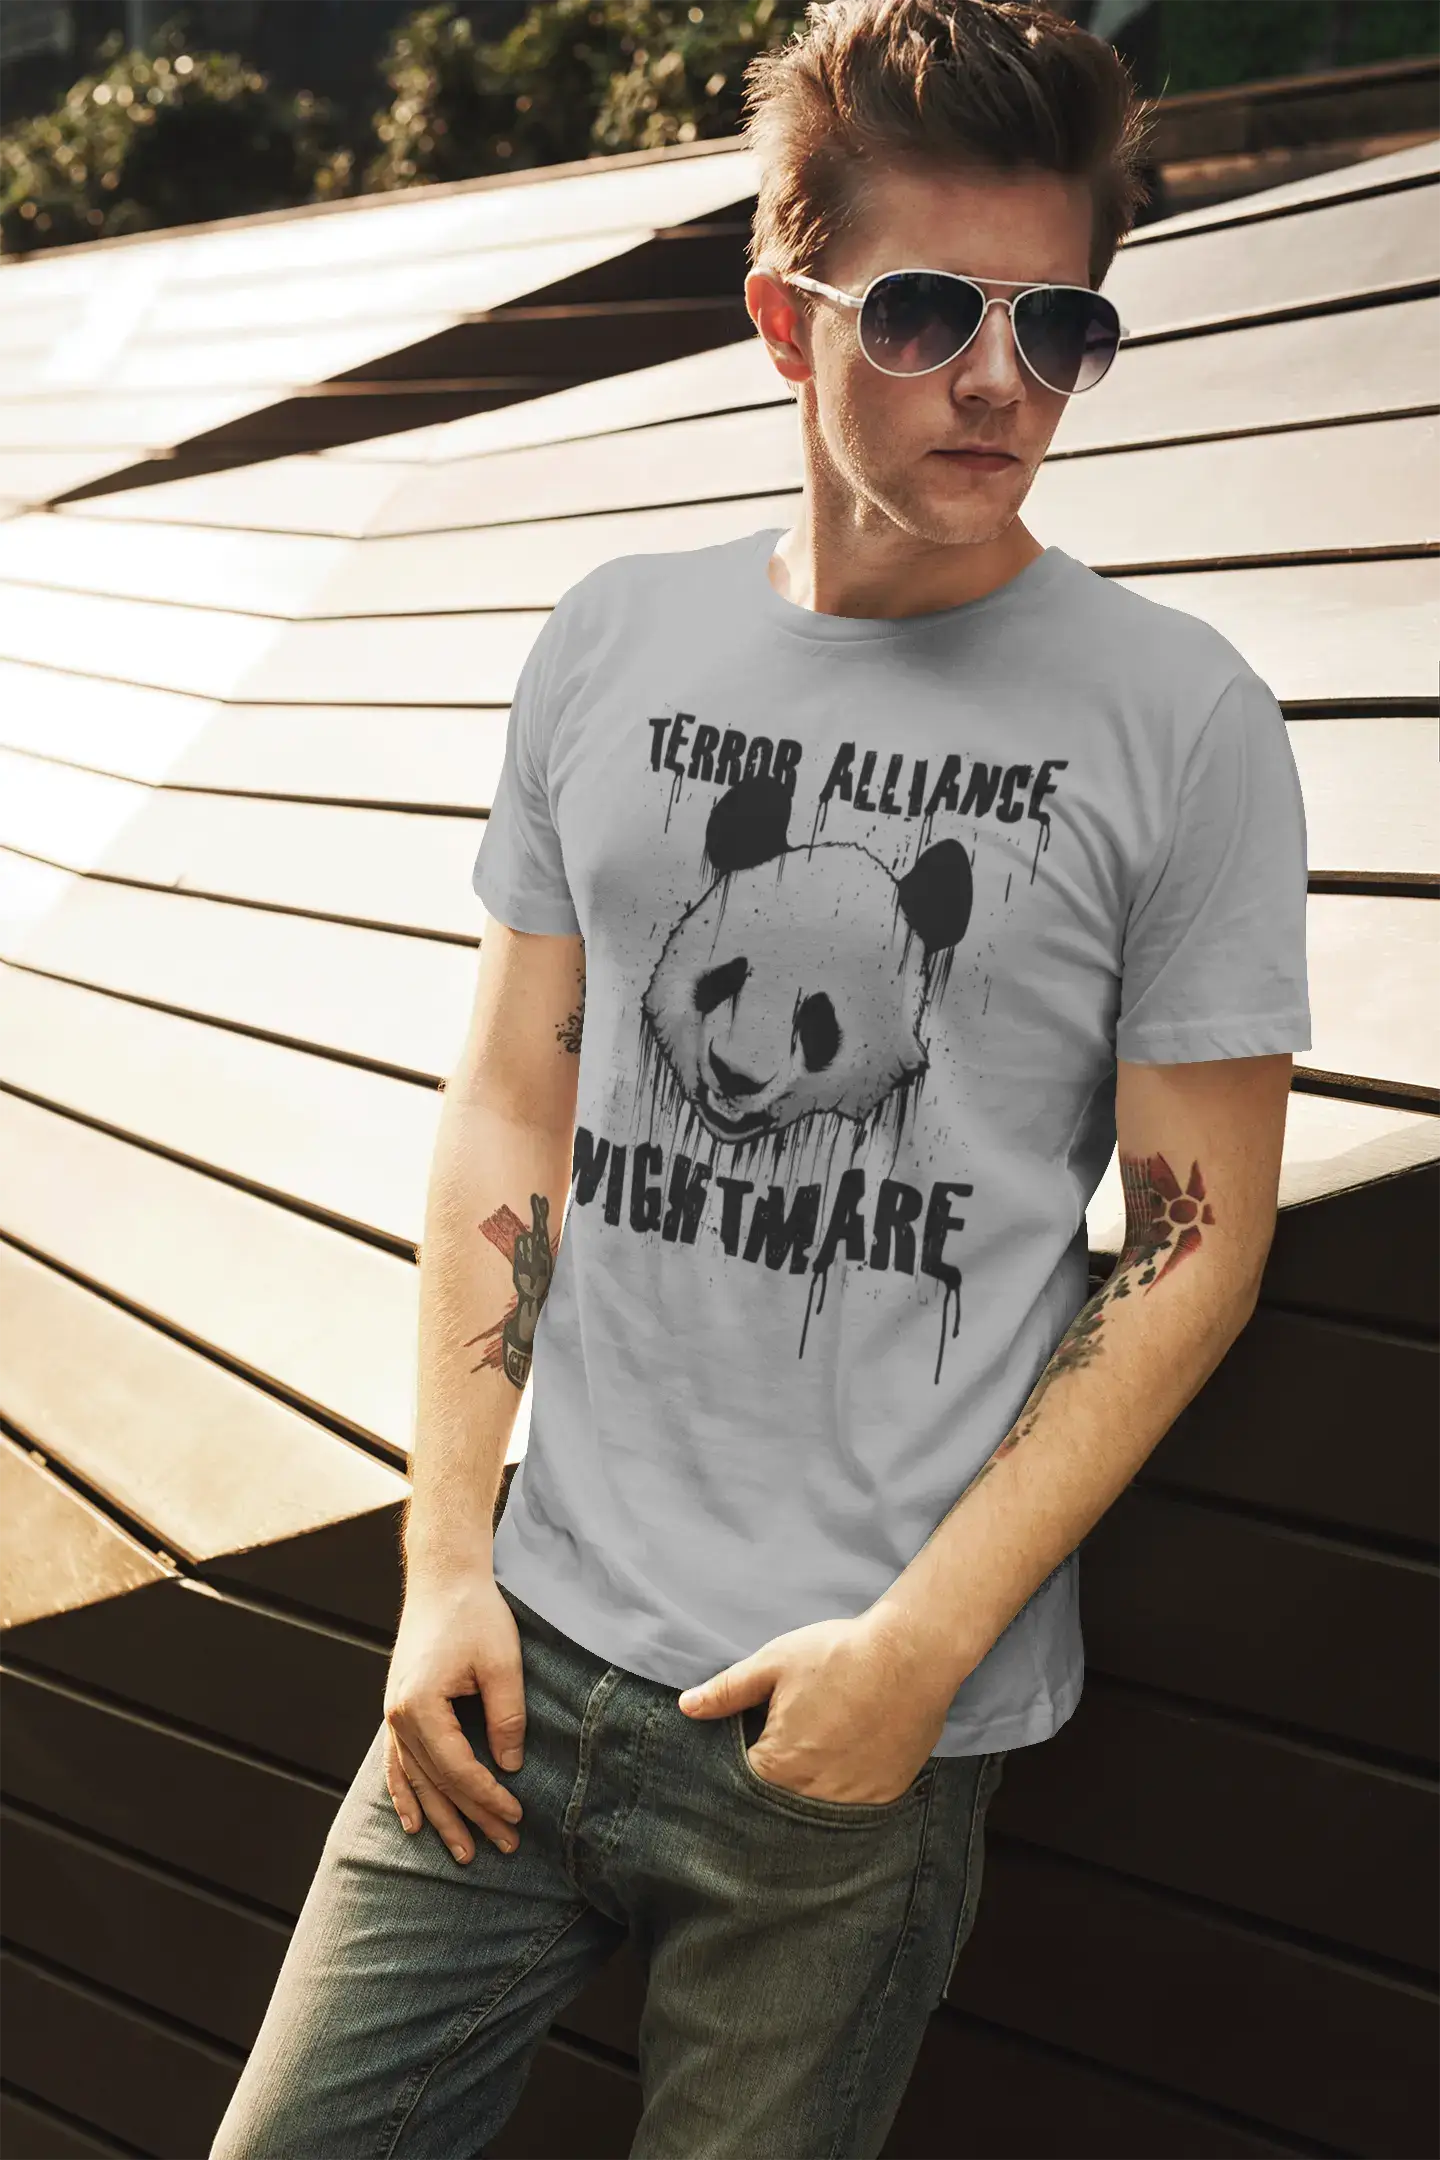 ULTRABASIC Herren-Grafik-T-Shirt Terror Alliance Nightmare – Panda-Shirt für Männer